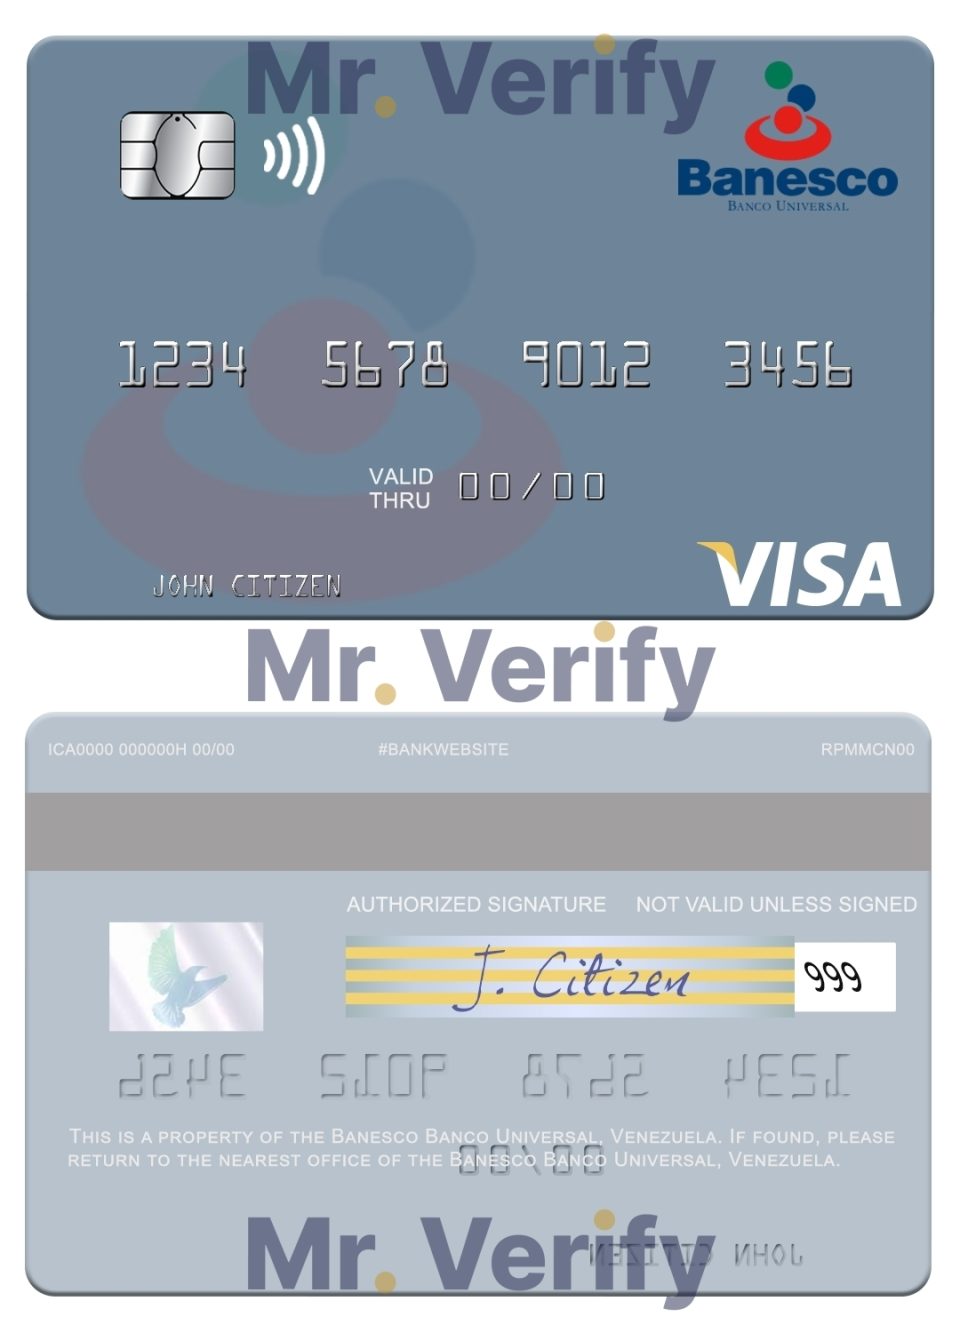 Fillable Venezuela Banesco Banco Universal visa debit card Templates | Layer-Based PSD